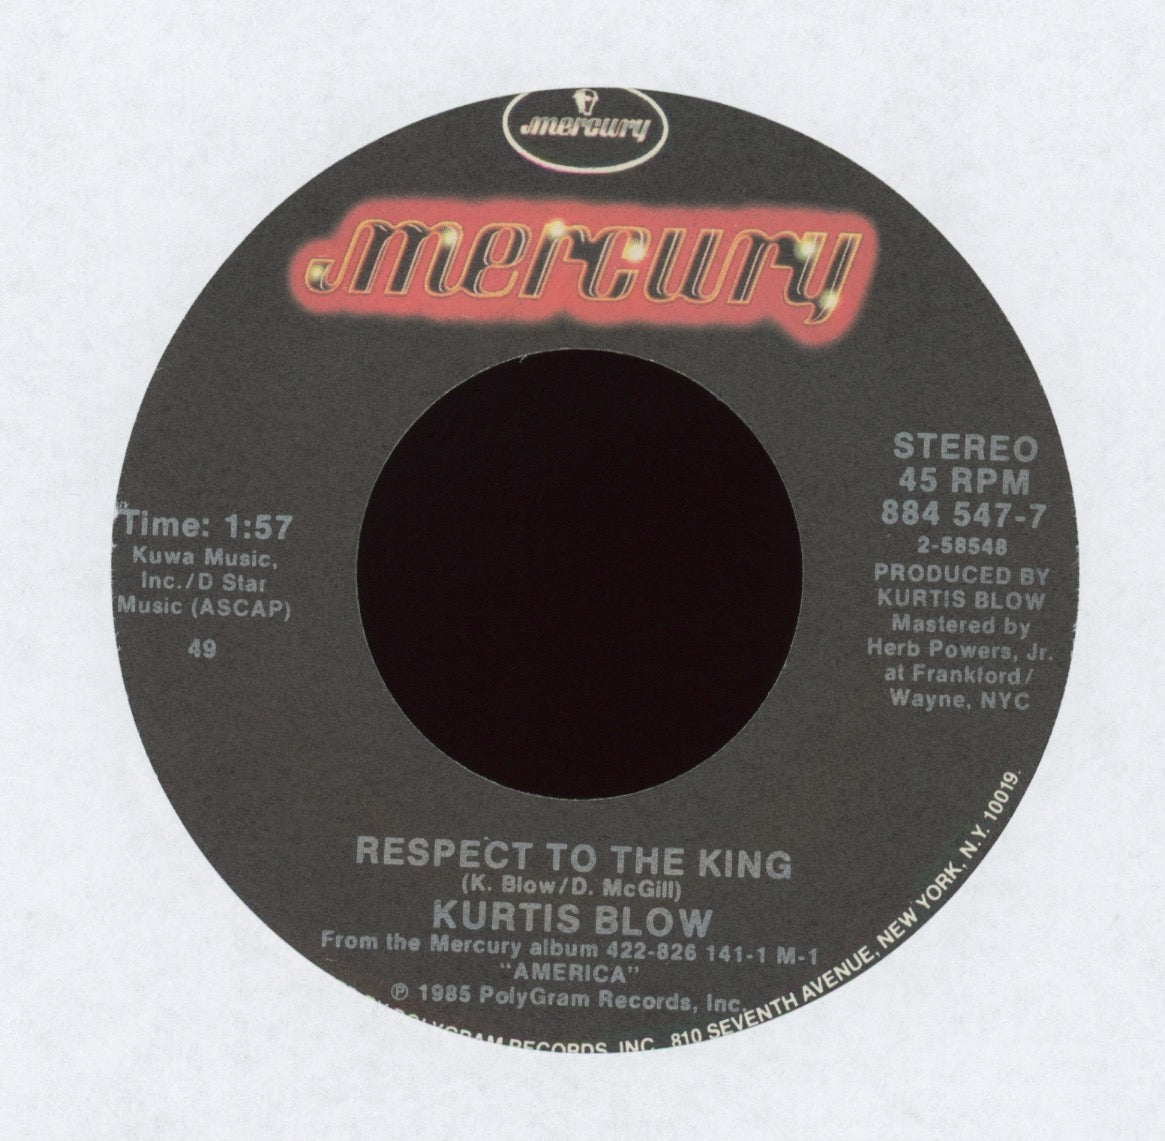 Kurtis Blow - Respect To The King on Mercury